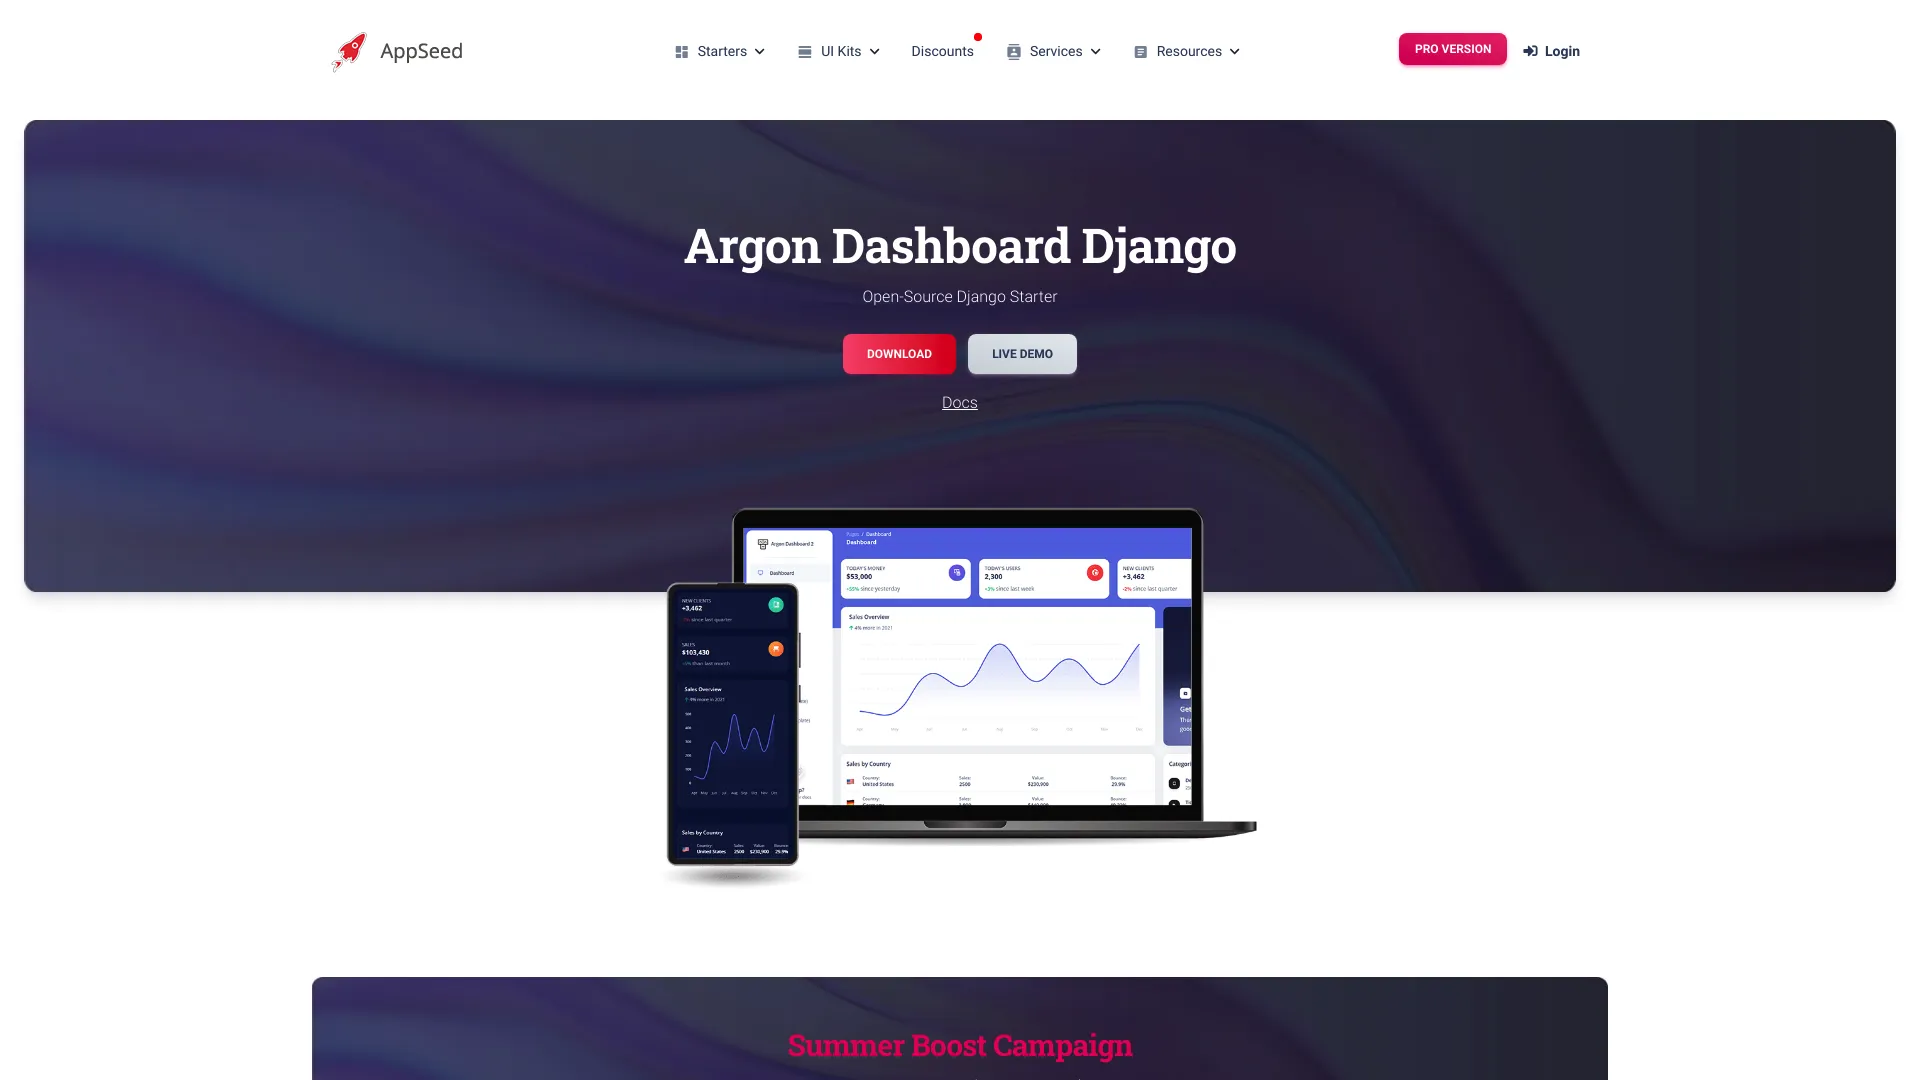 Django Argon Dashboard screenshot